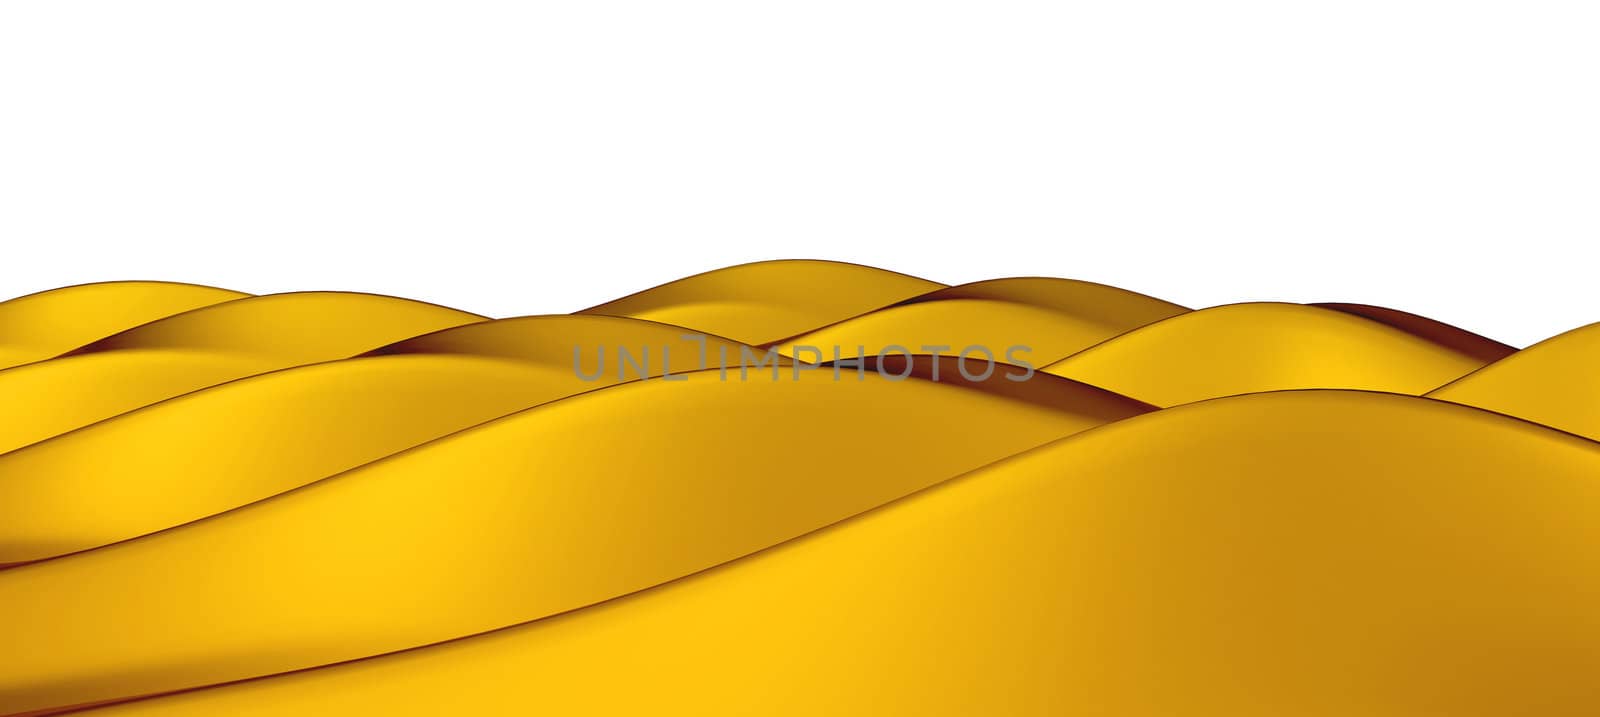 Golden hummoks or dunes isolated over white background